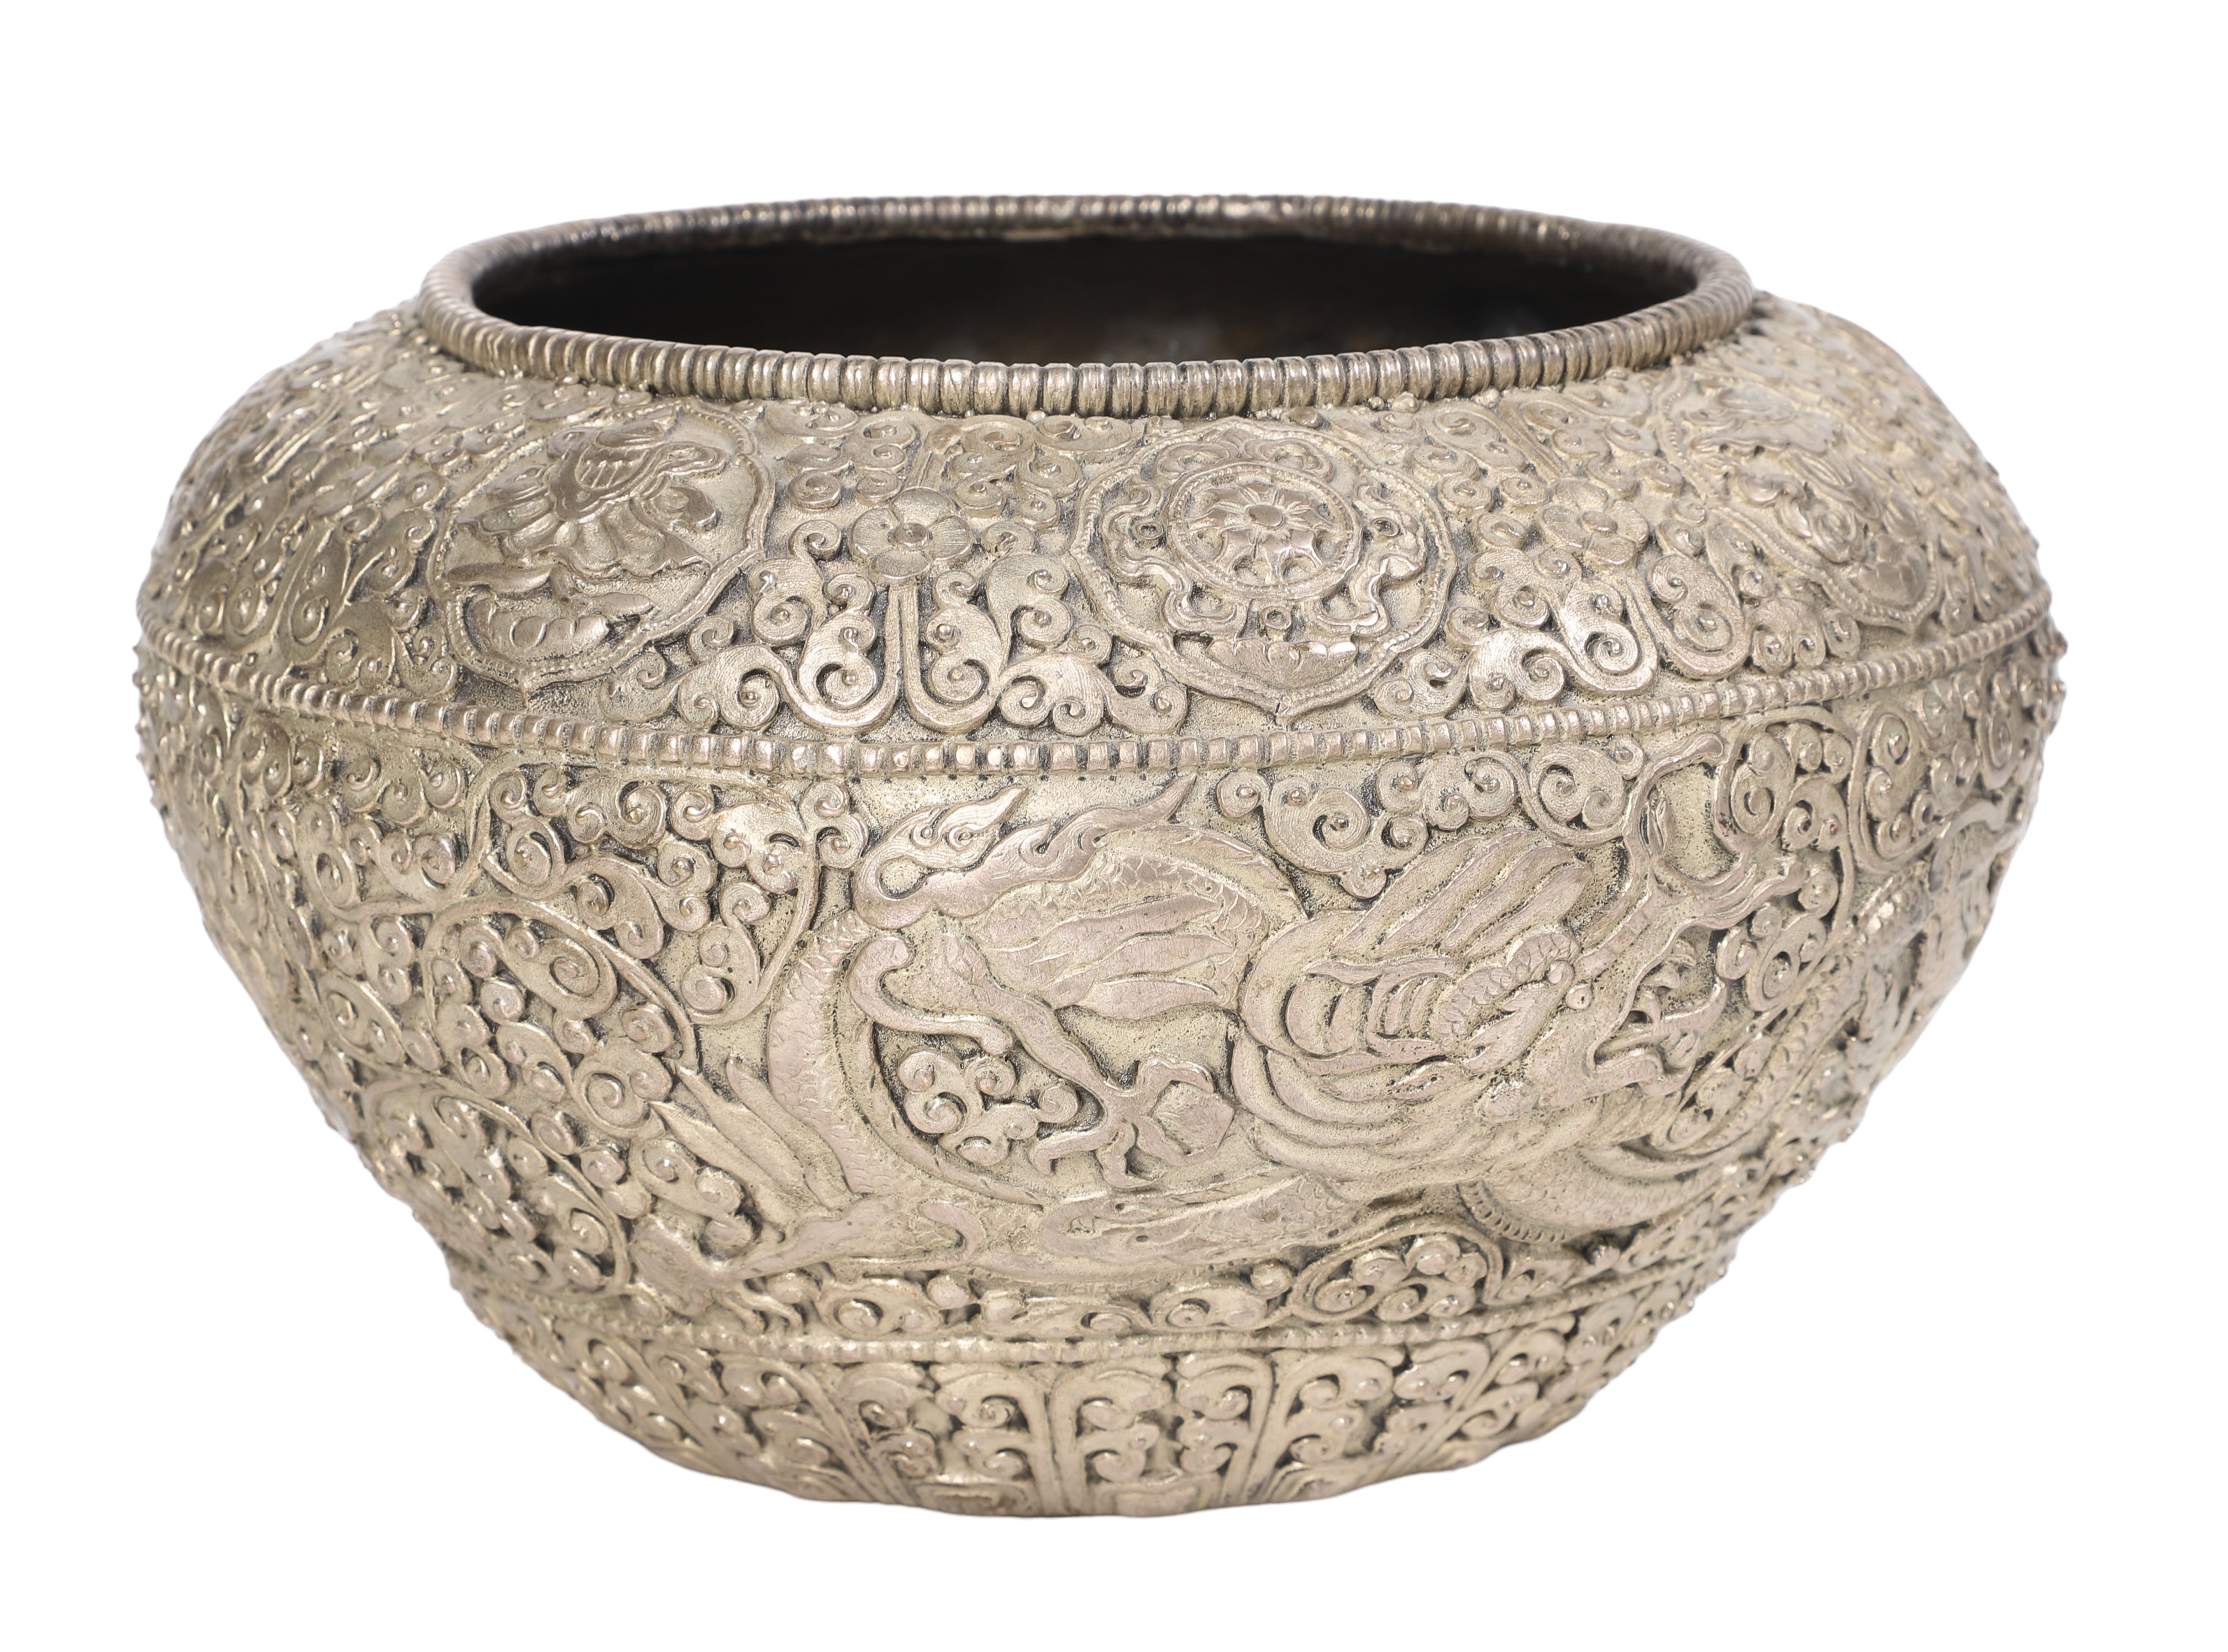 Tibetan silvered metal bowl, Buddhist